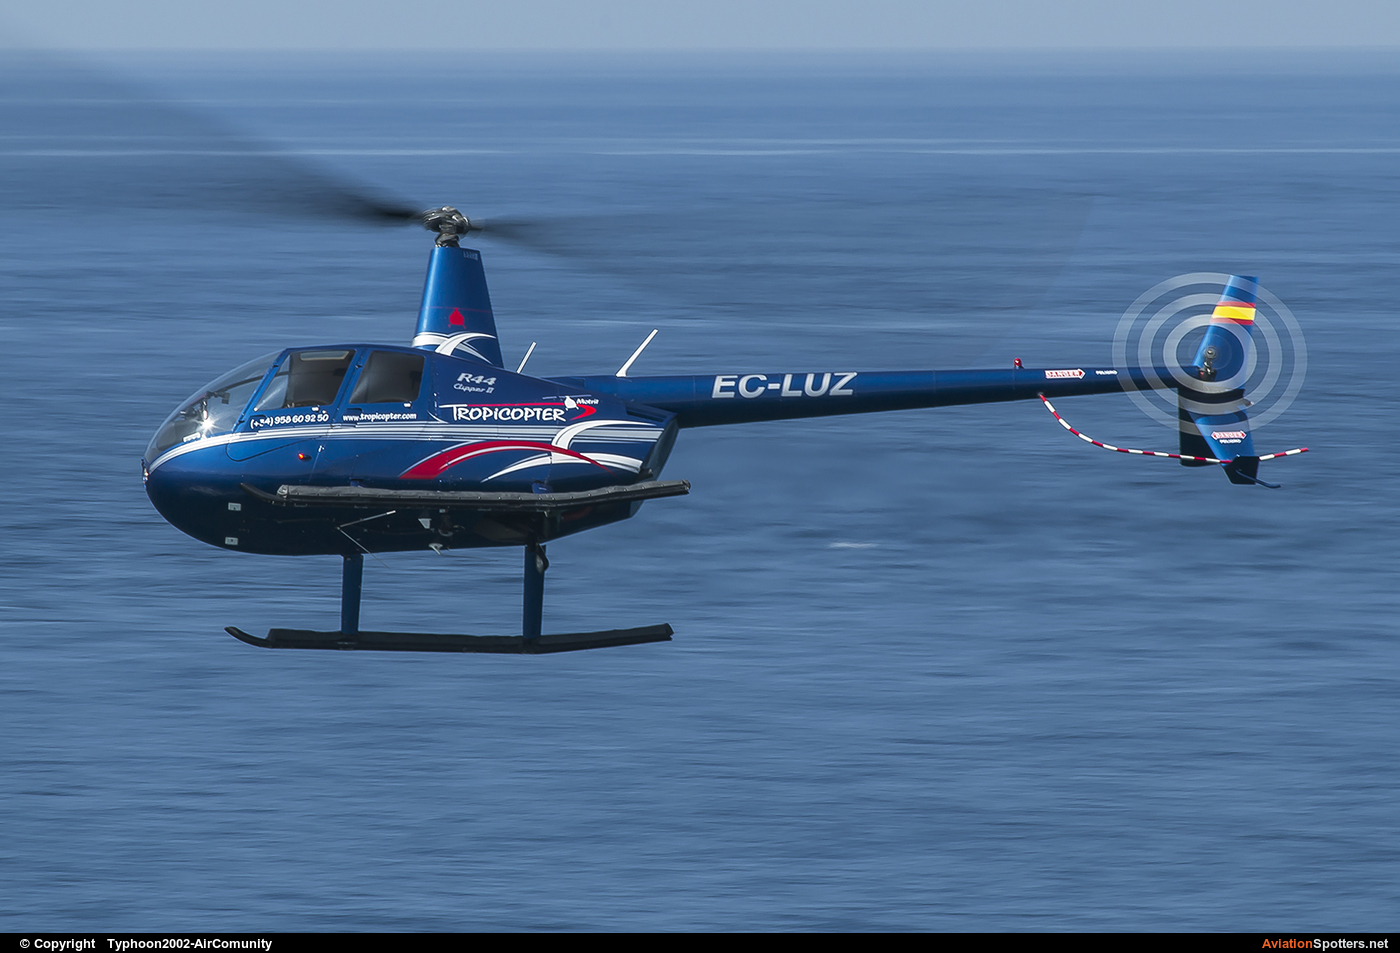   R44 Clipper  (EC-LUZ) By Typhoon2002-AirComunity (AirComunity)